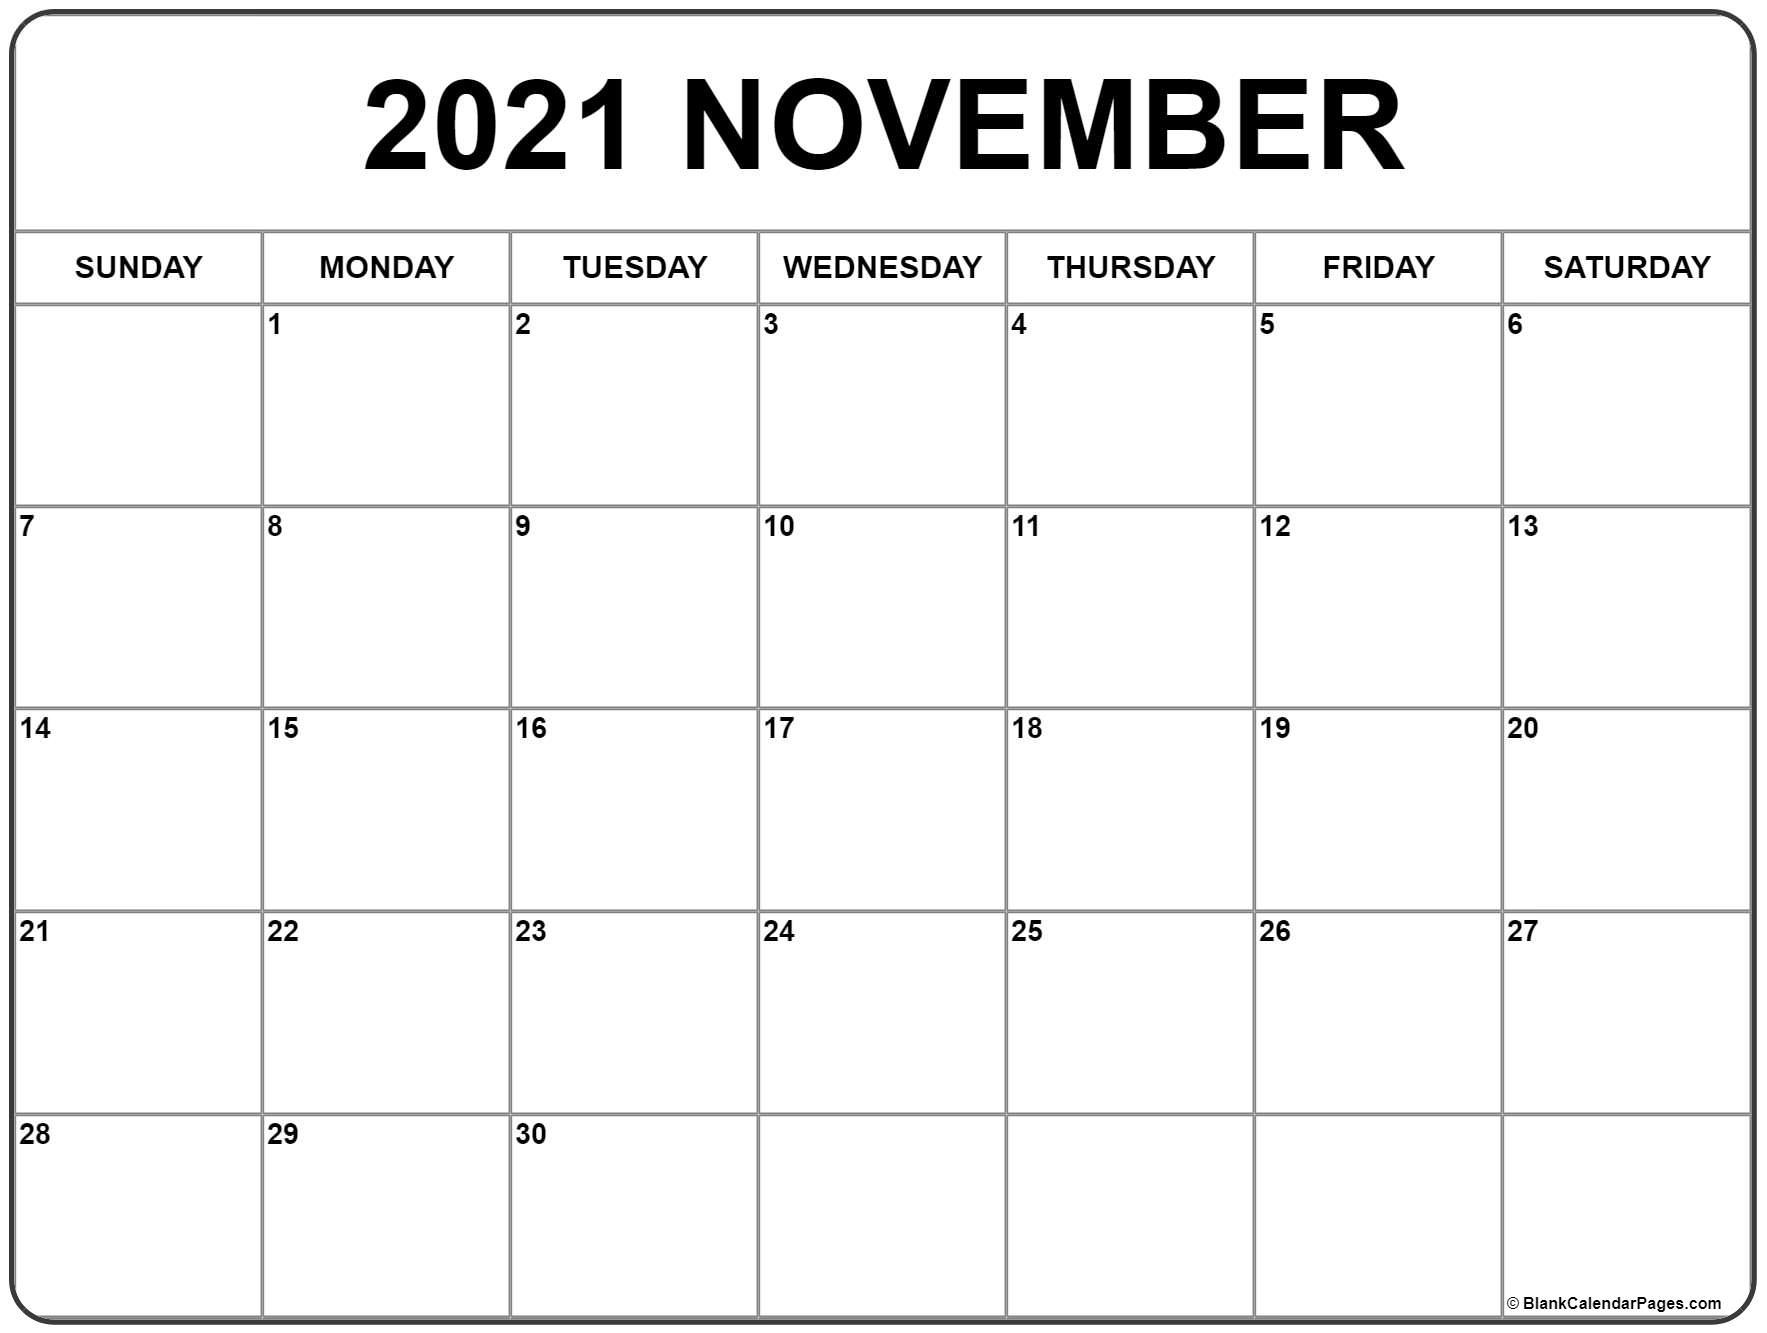 Calendar November 2021 Thanksgiving | Calendar 2021 November 2020 - January 2021 Calendar